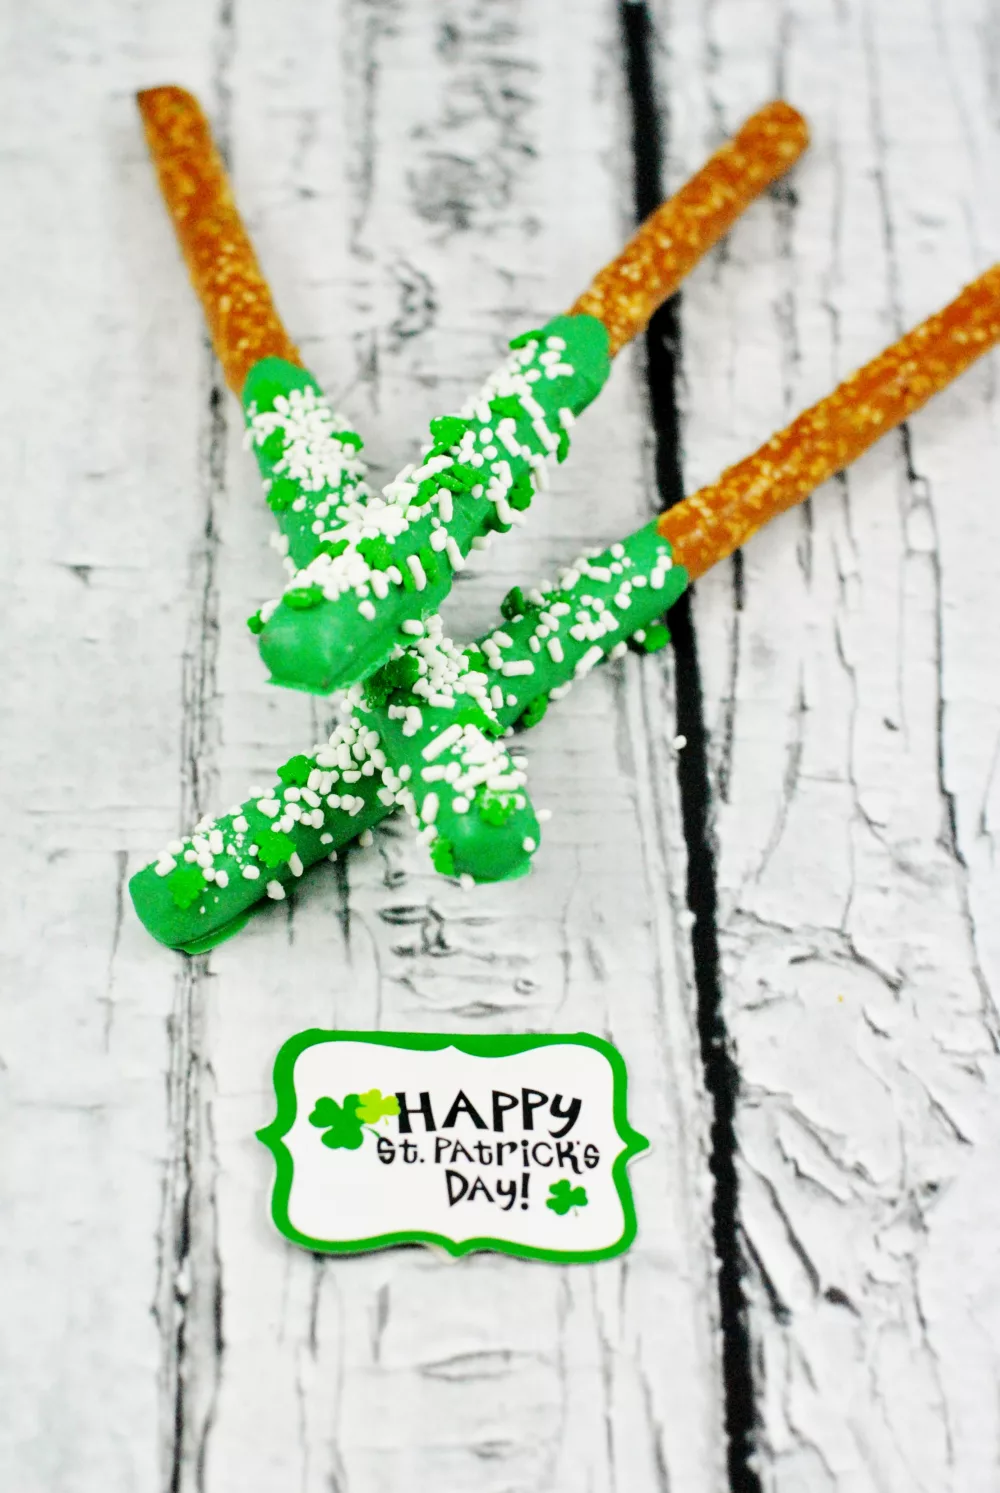 St. Patrick's Day Candy Coated Pretzel Rods